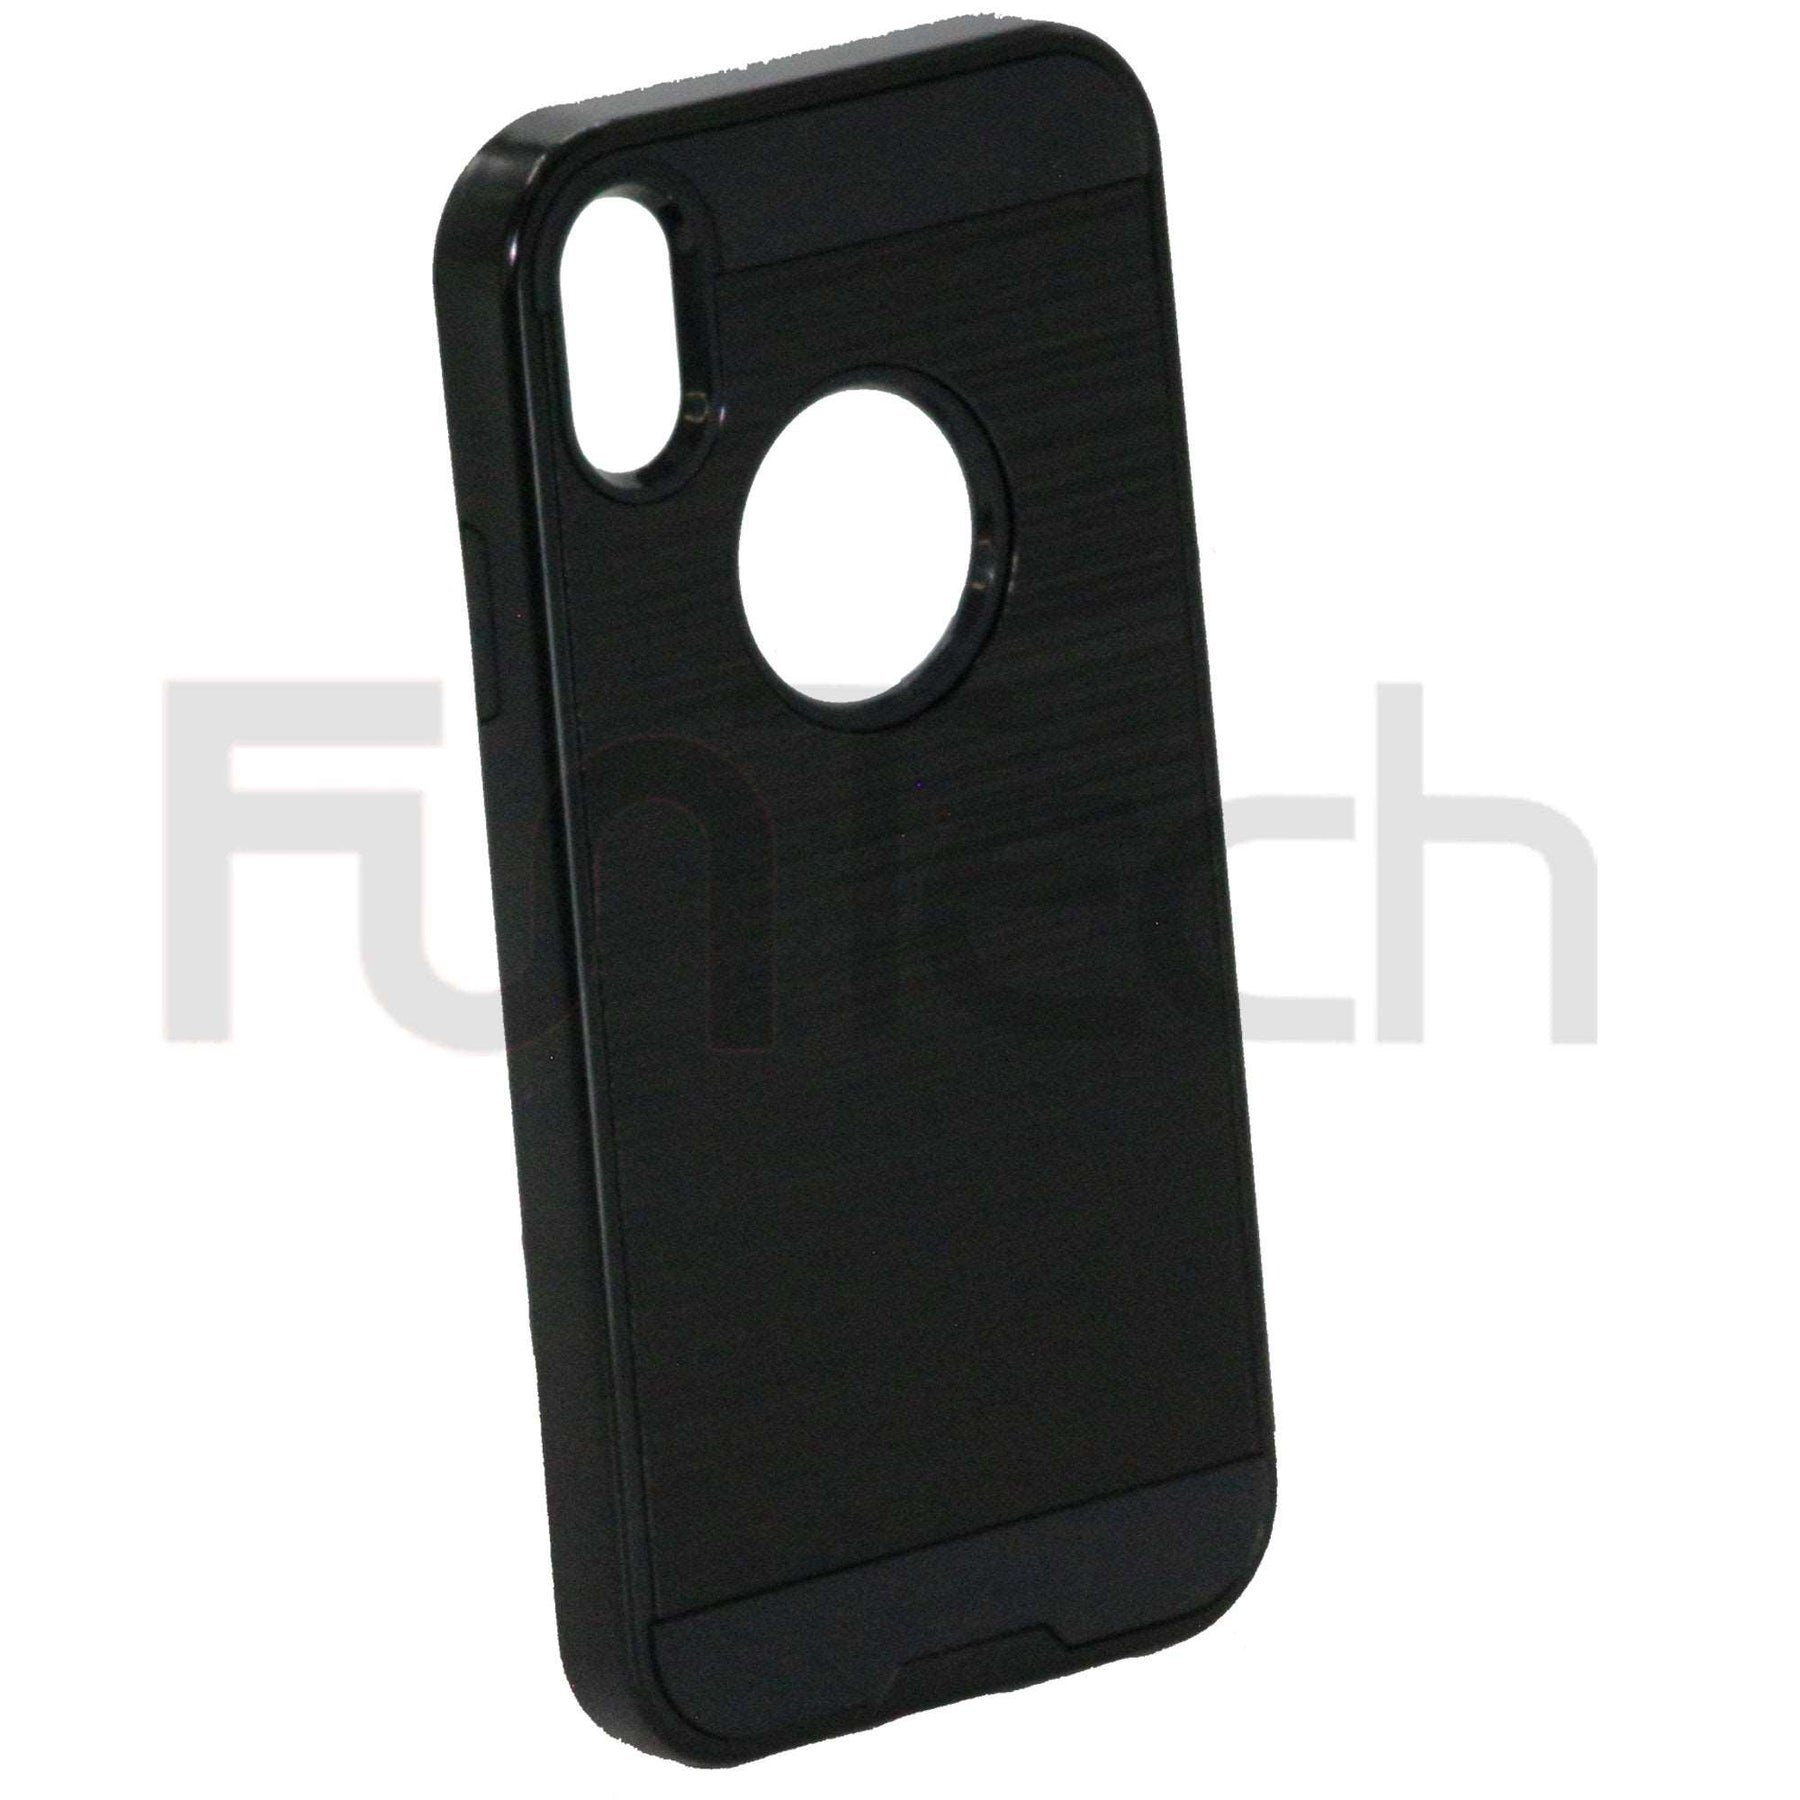 Apple iPhone XR Slim Armor Case Black